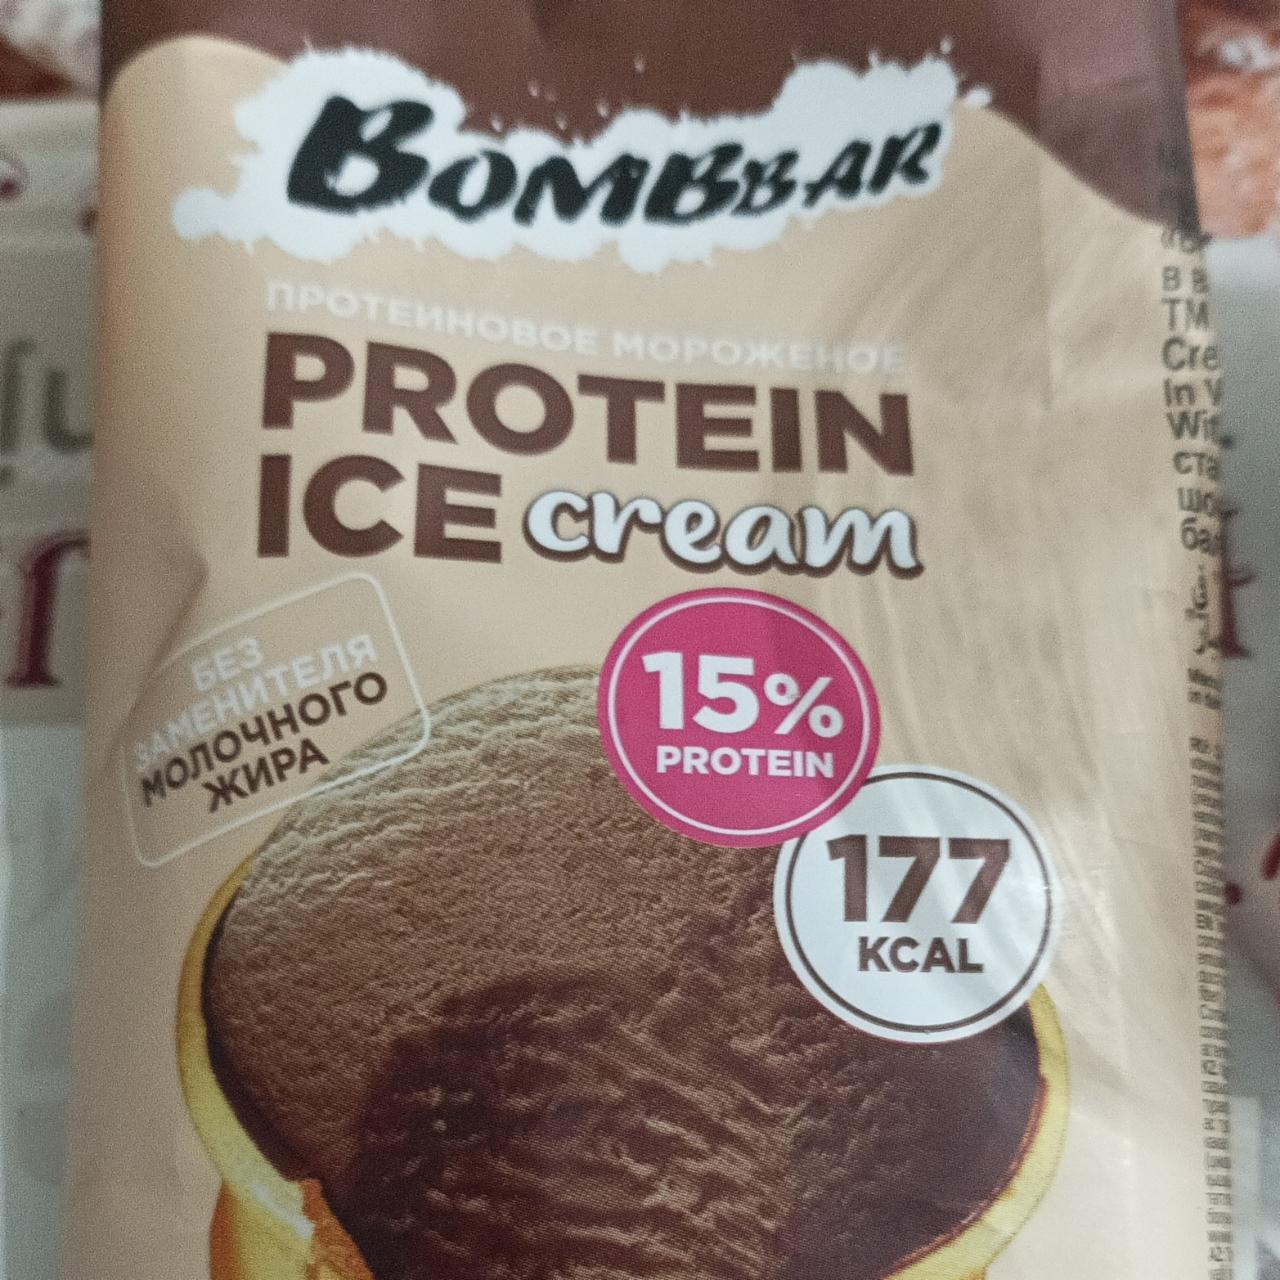 Фото - Мороженое протеиновое без сахара бельгийский шоколад Bombar